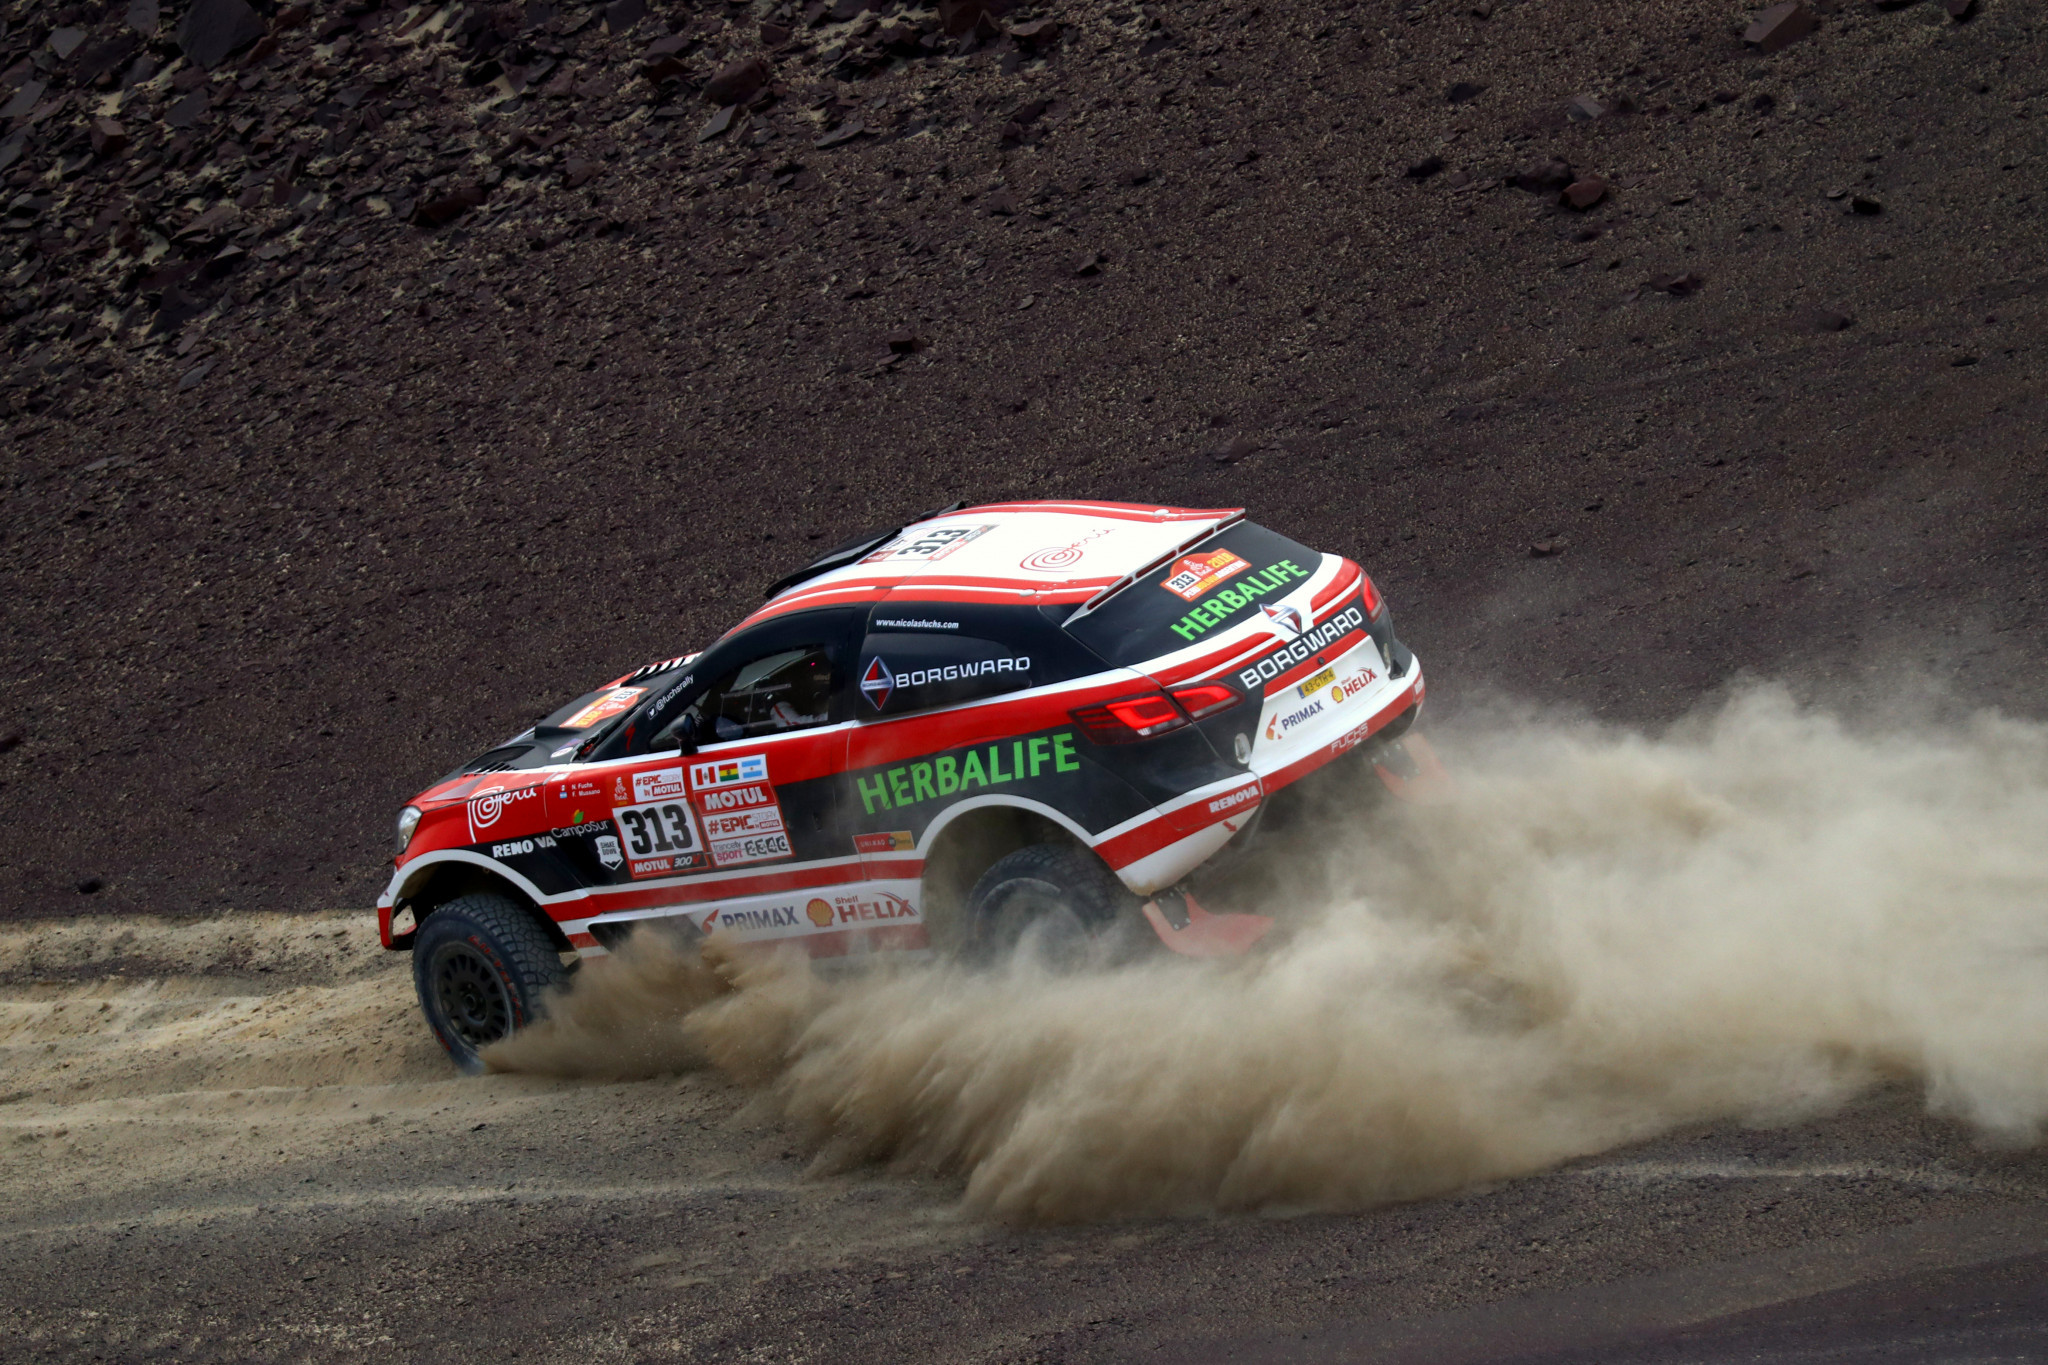 Nicolas Fuchs Sierlecki also took part in the Dakar Rally in 2018 ©Getty Images